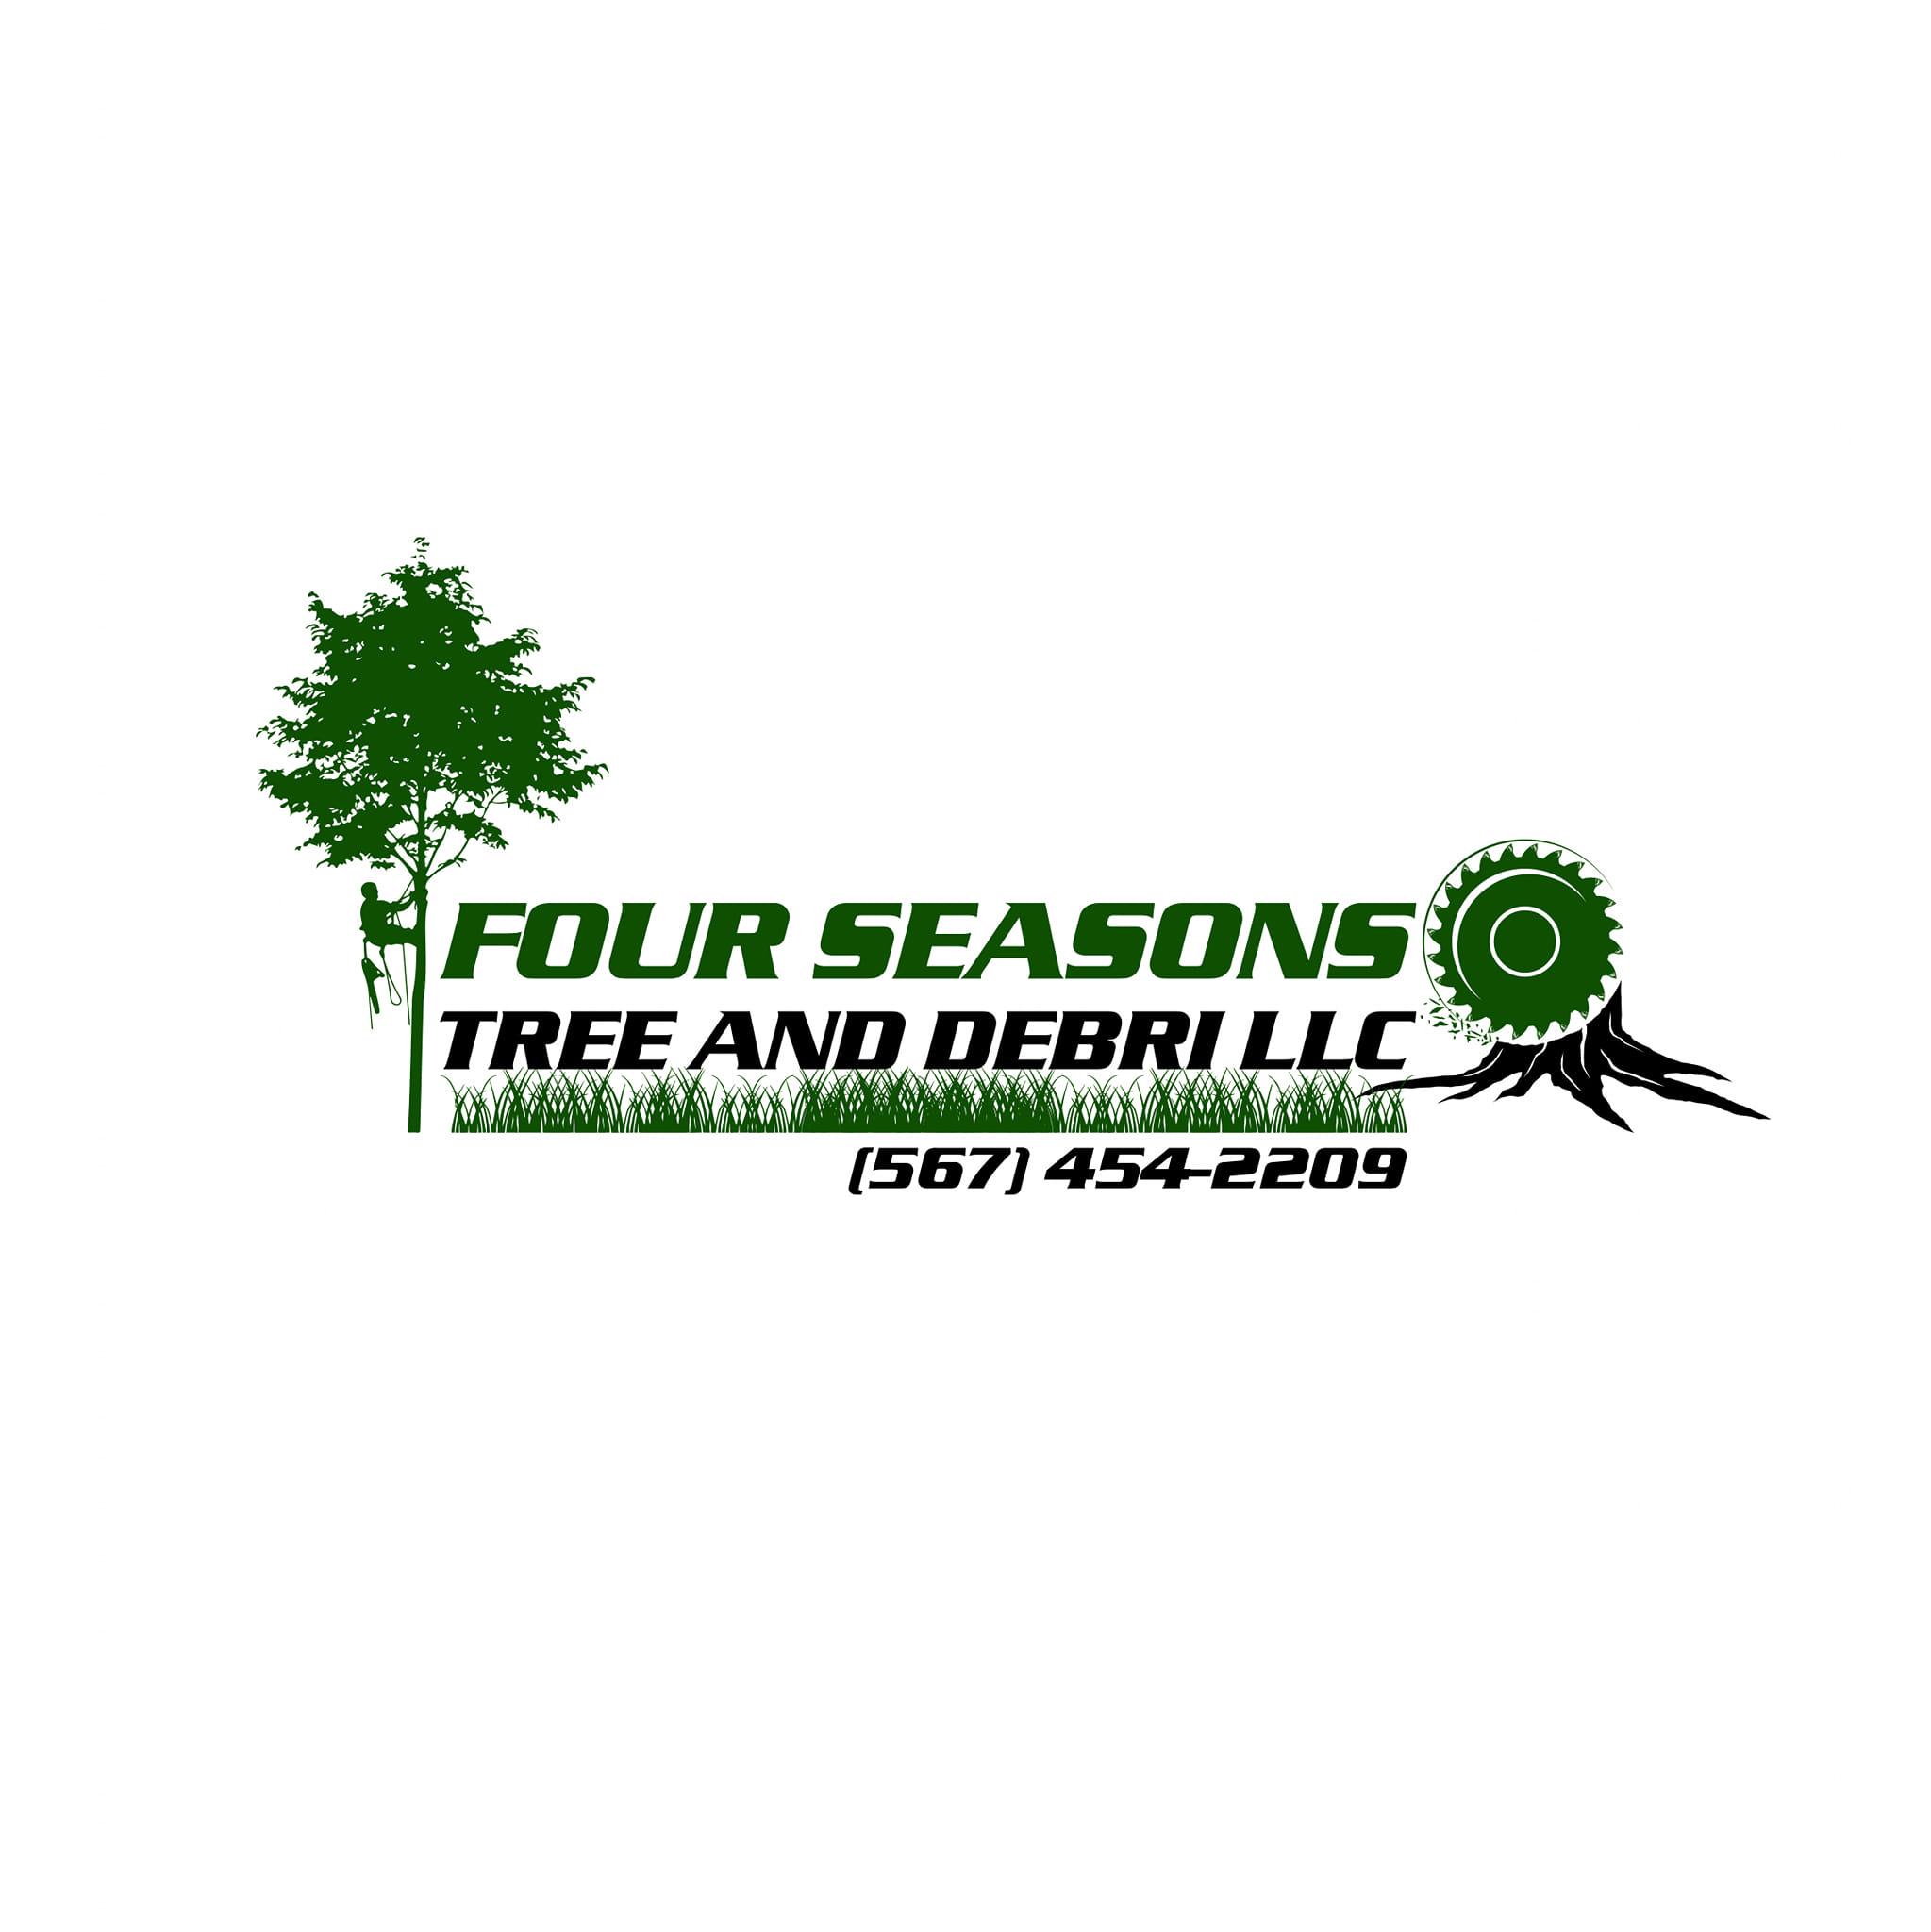 Four seasons tree and debri llc 627 W Elm St, Wauseon Ohio 43567